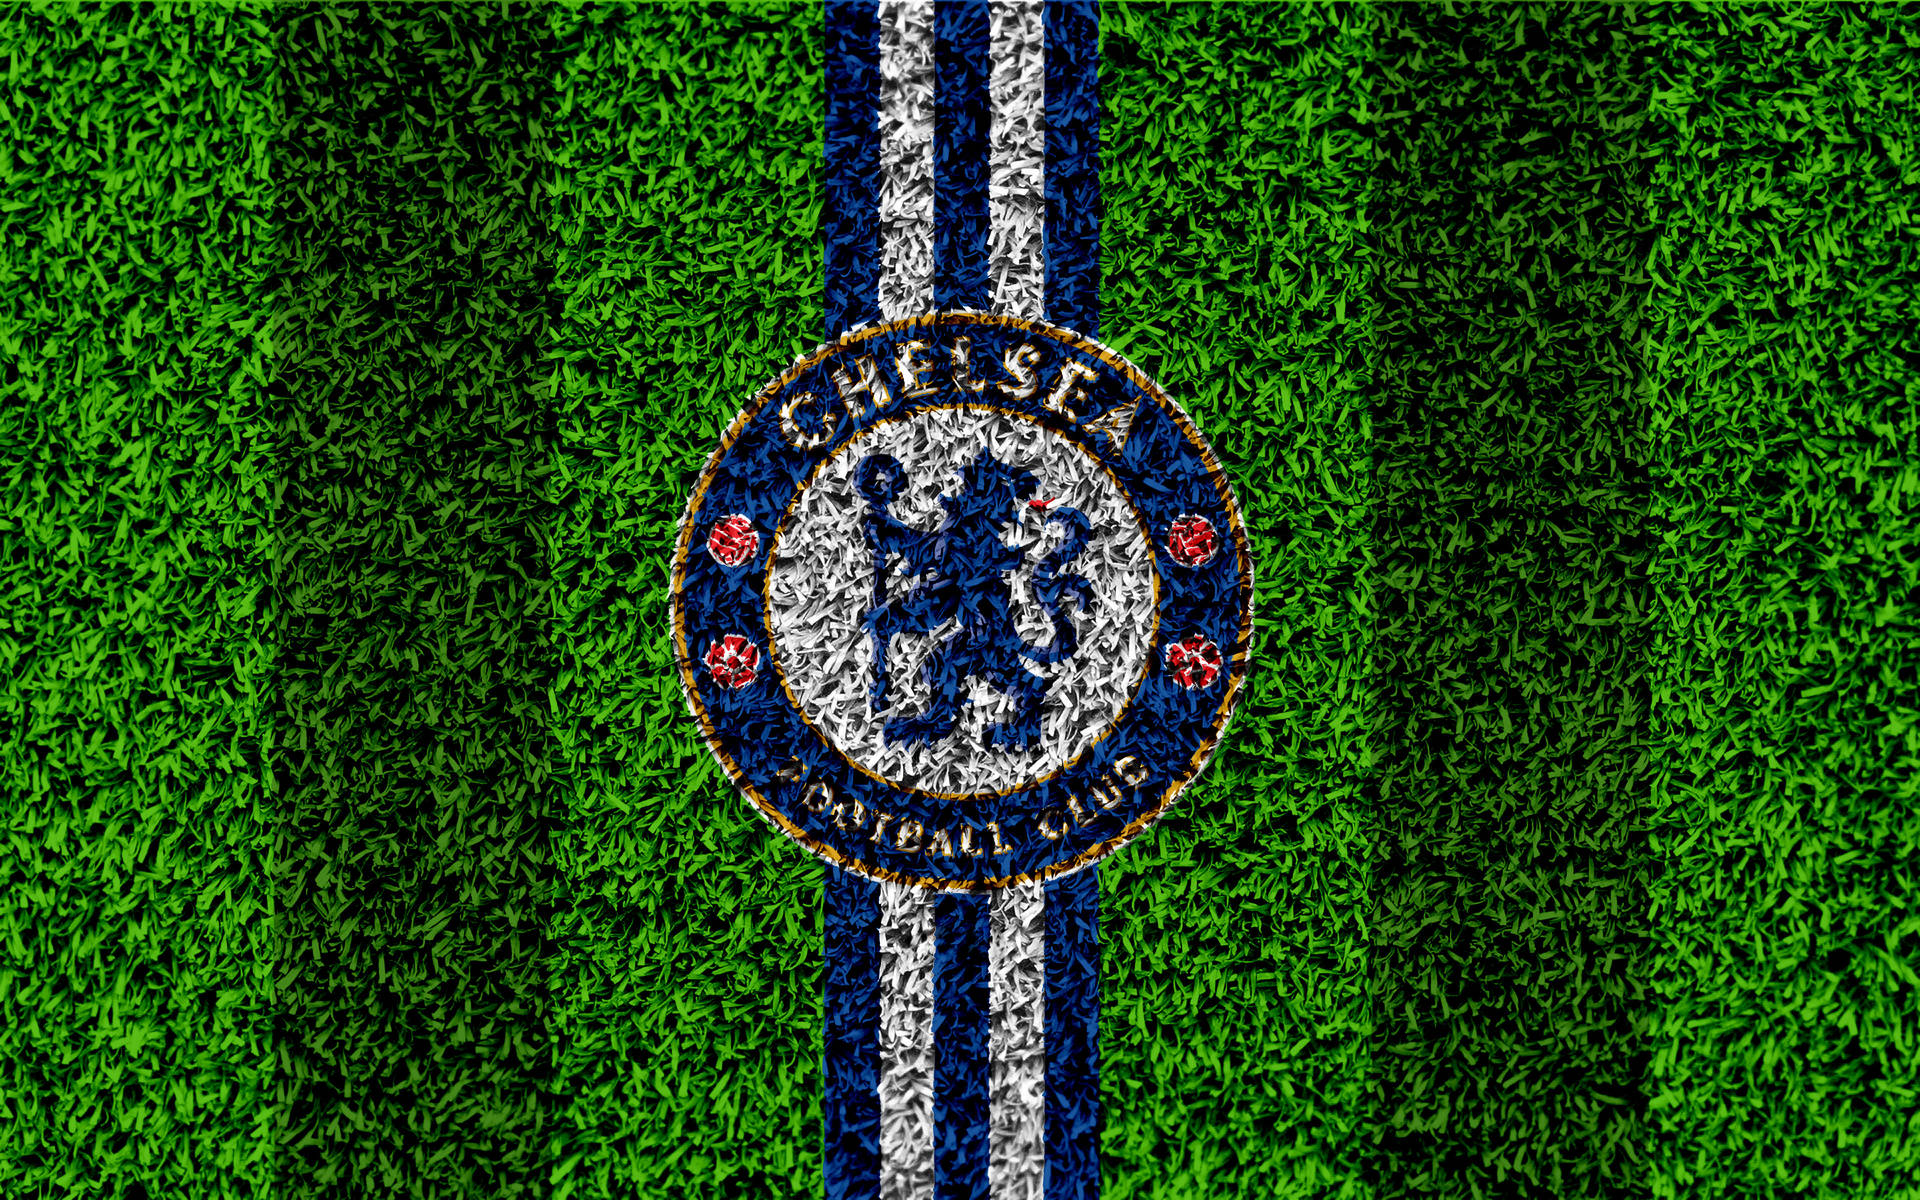 Chelsea Fc Logo On Grass Background